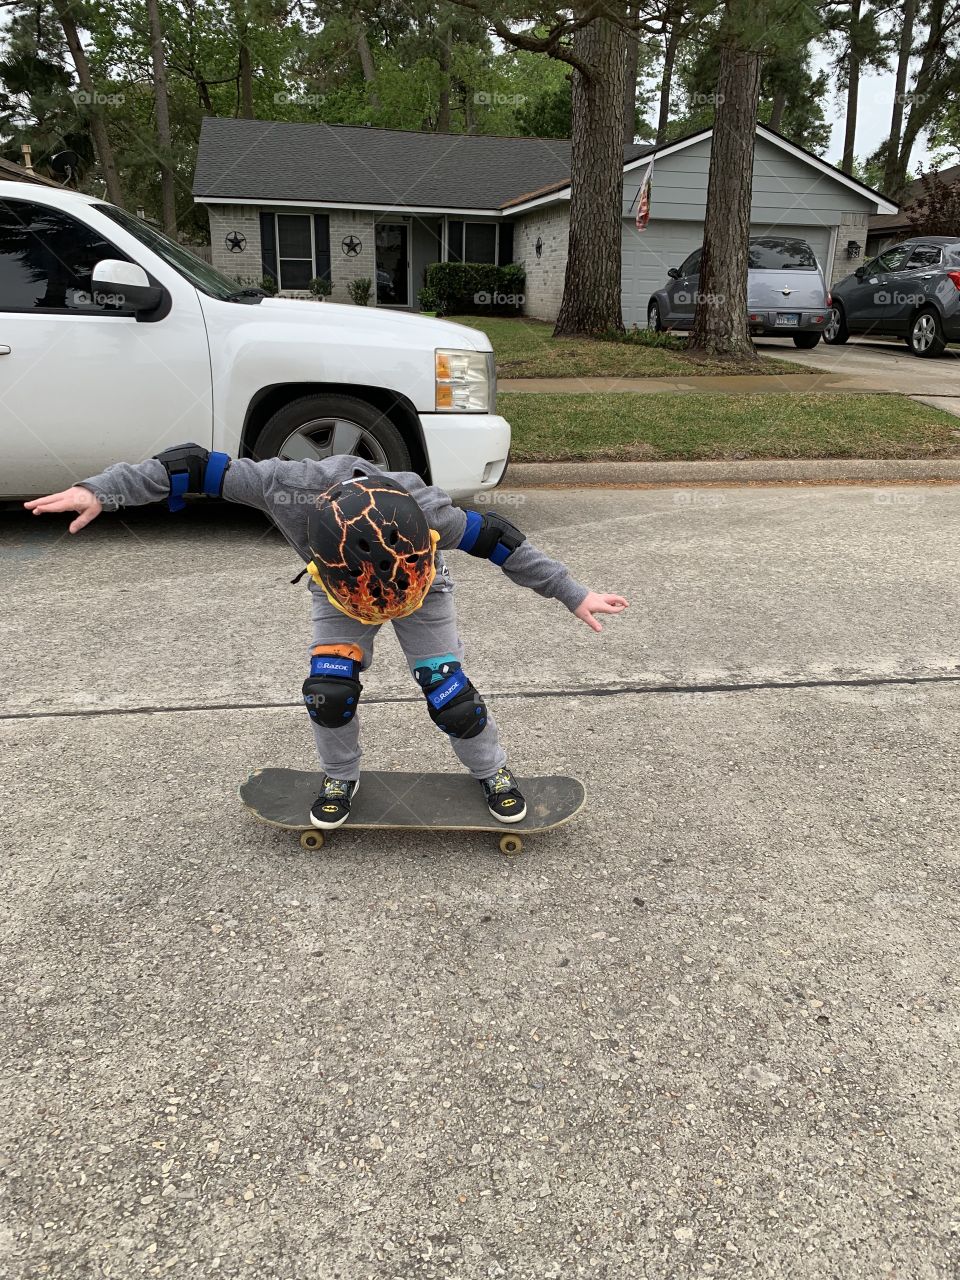 Skate board Boy